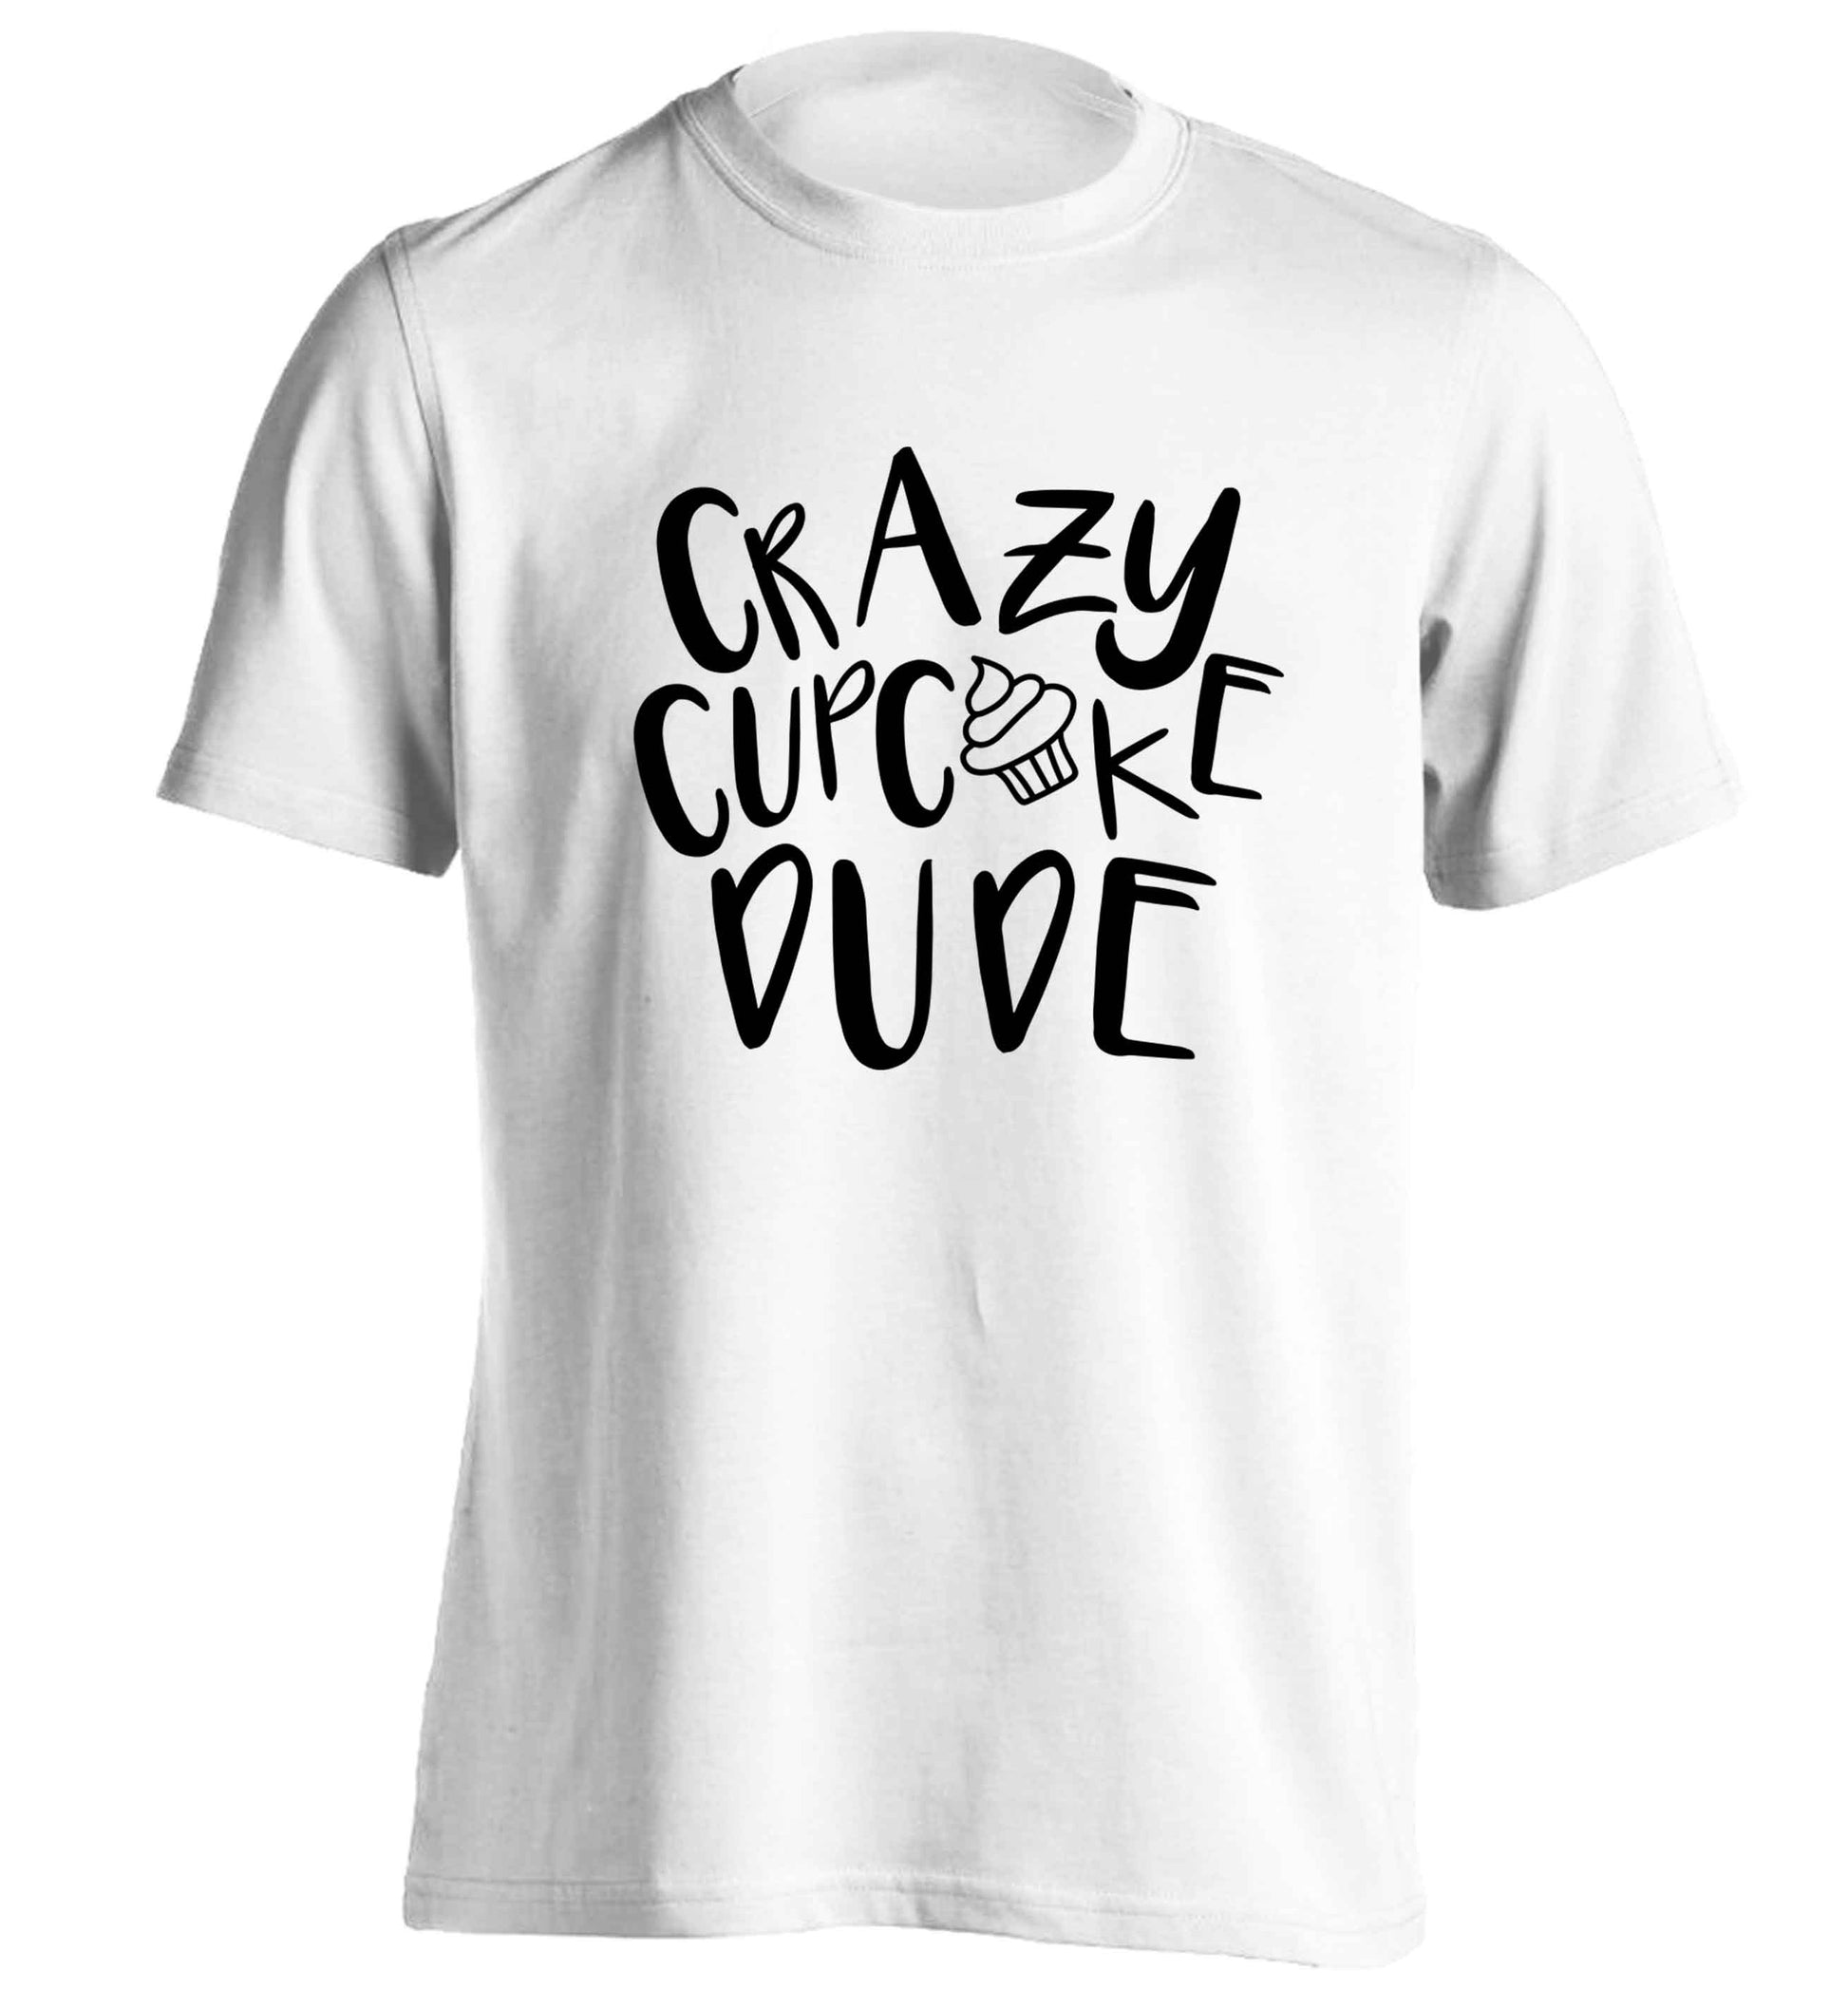 Crazy cupcake dude adults unisex white Tshirt 2XL